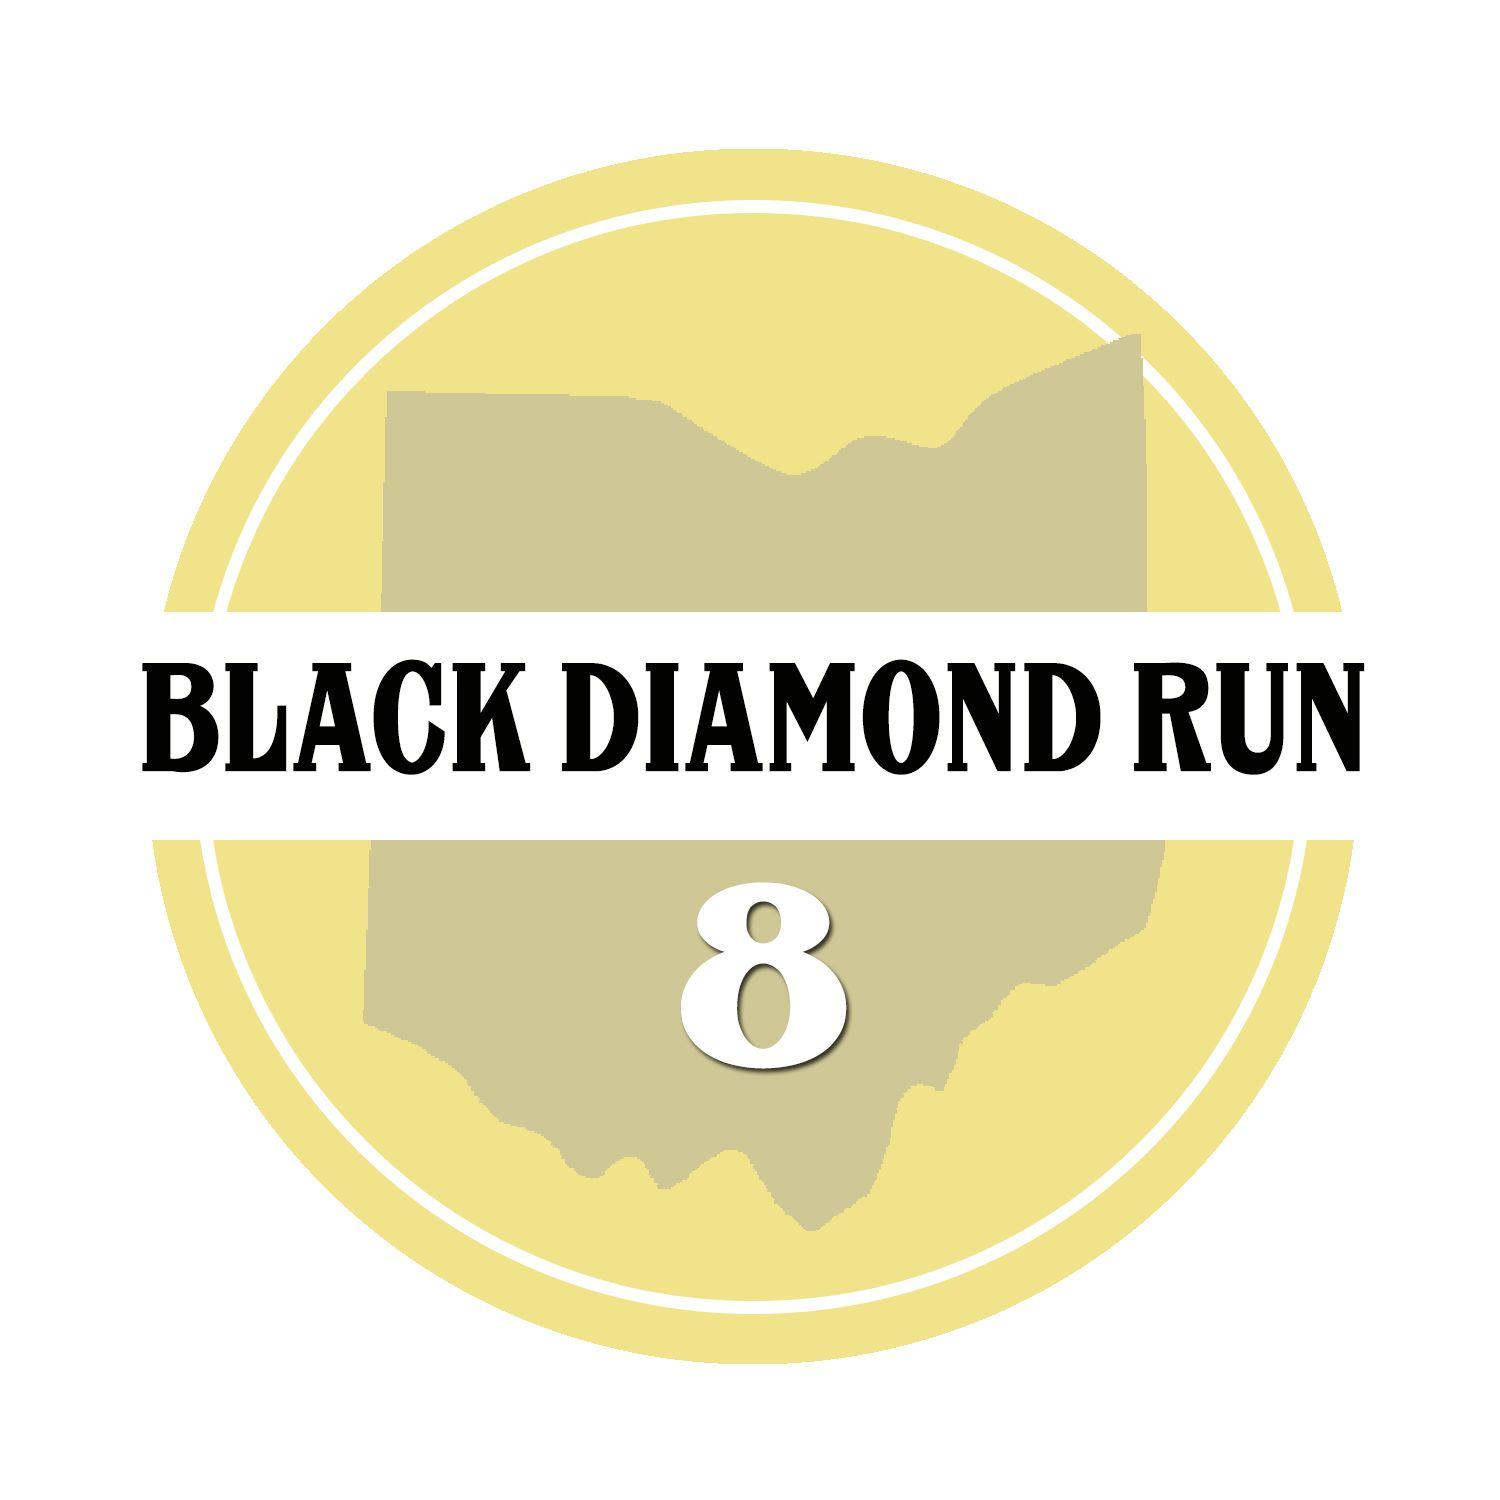 Diamond Run Logo - Ohio's Windy 9 Route #8 – Black Diamond Run | Athens County ...